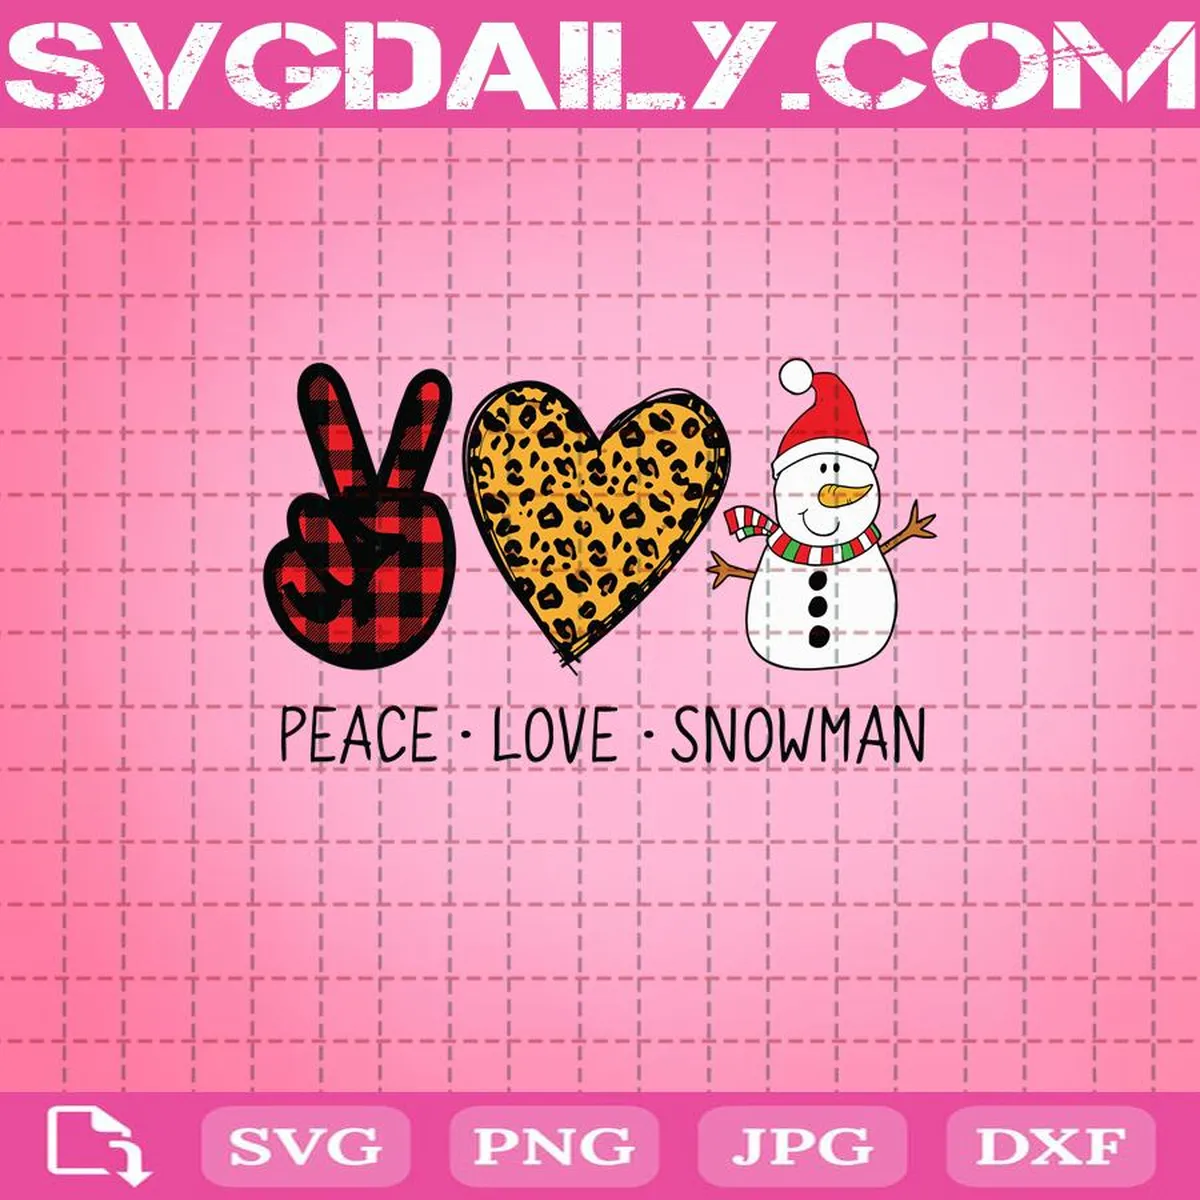 Peace Love Snowman Svg, Peace Love Svg, Love Snowman Svg, Snowman Svg, Christmas Svg, Snowman Christmas Svg